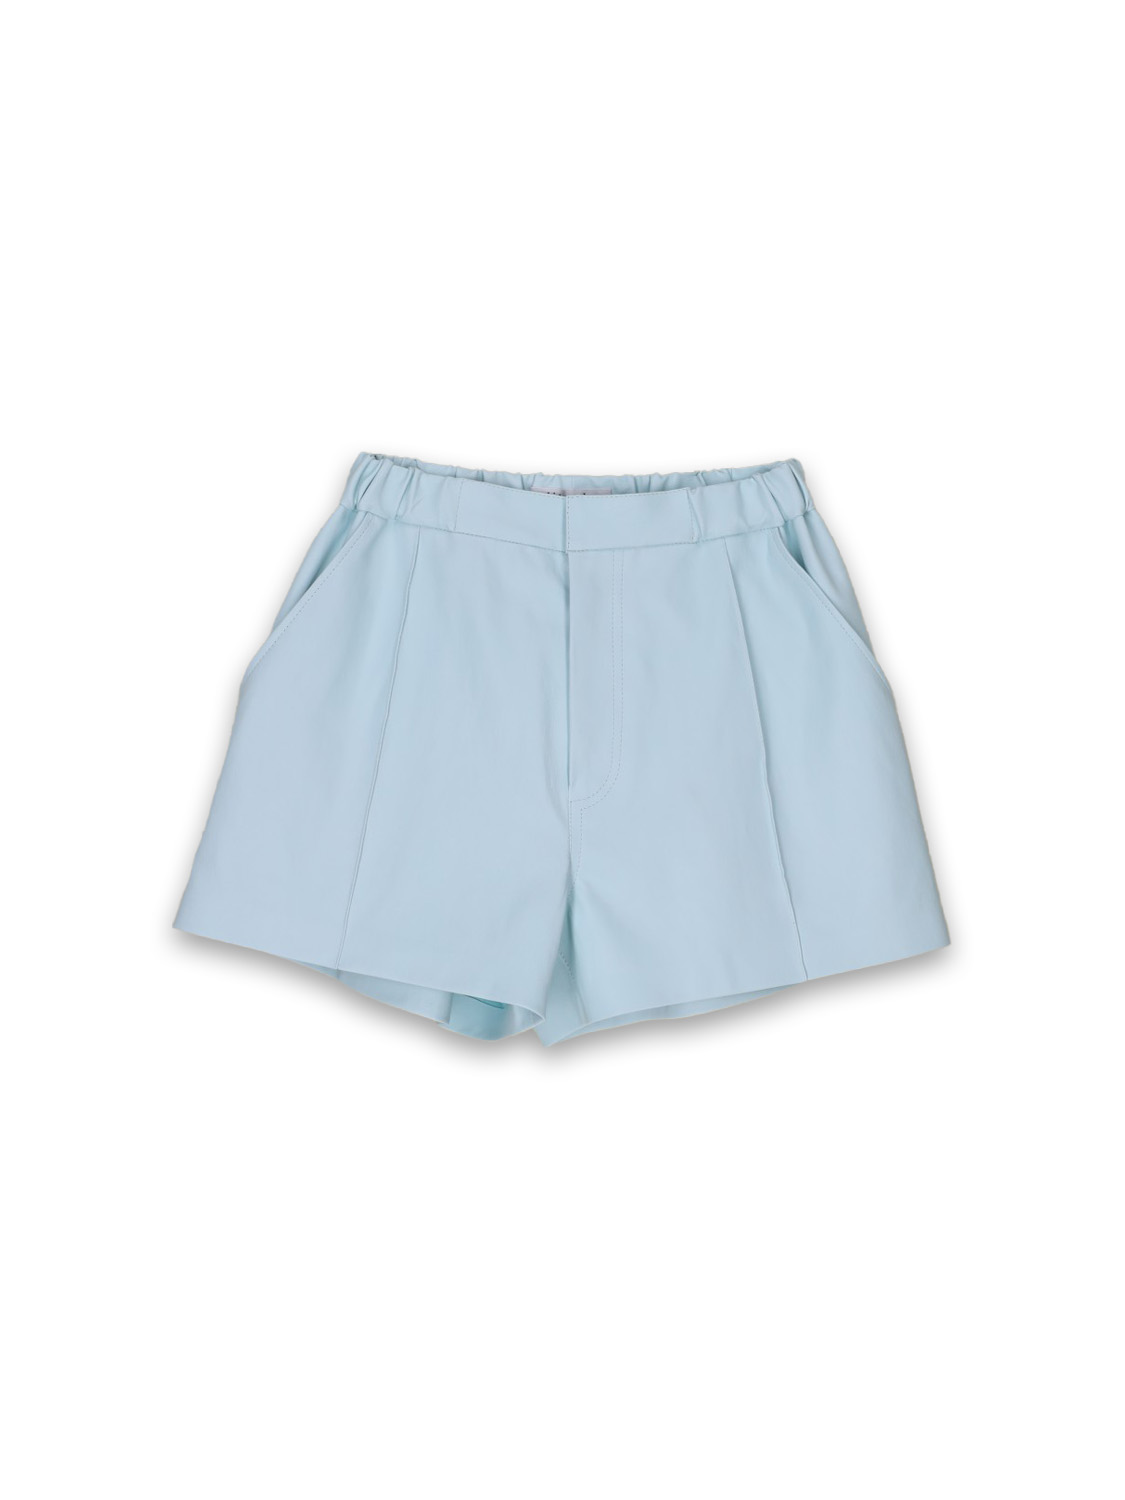 jitrois Edie Shorts – soft shorts in lamb leather  mint 34